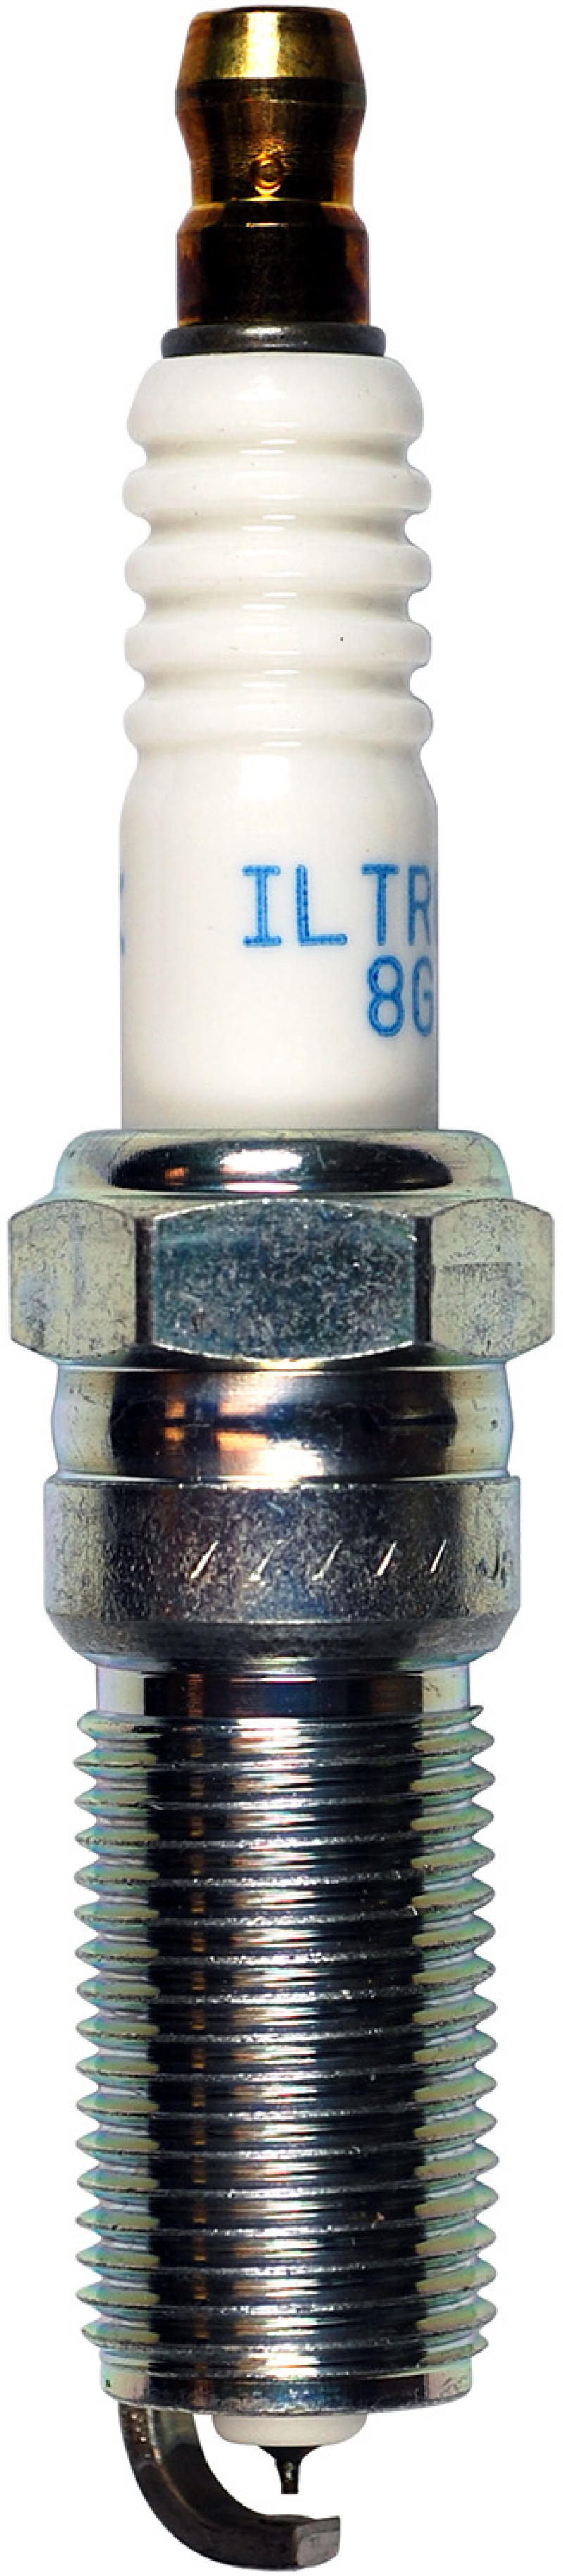 NGK Laser Iridium Spark Plug Box of 4 (ILTR6H8G) - 96870